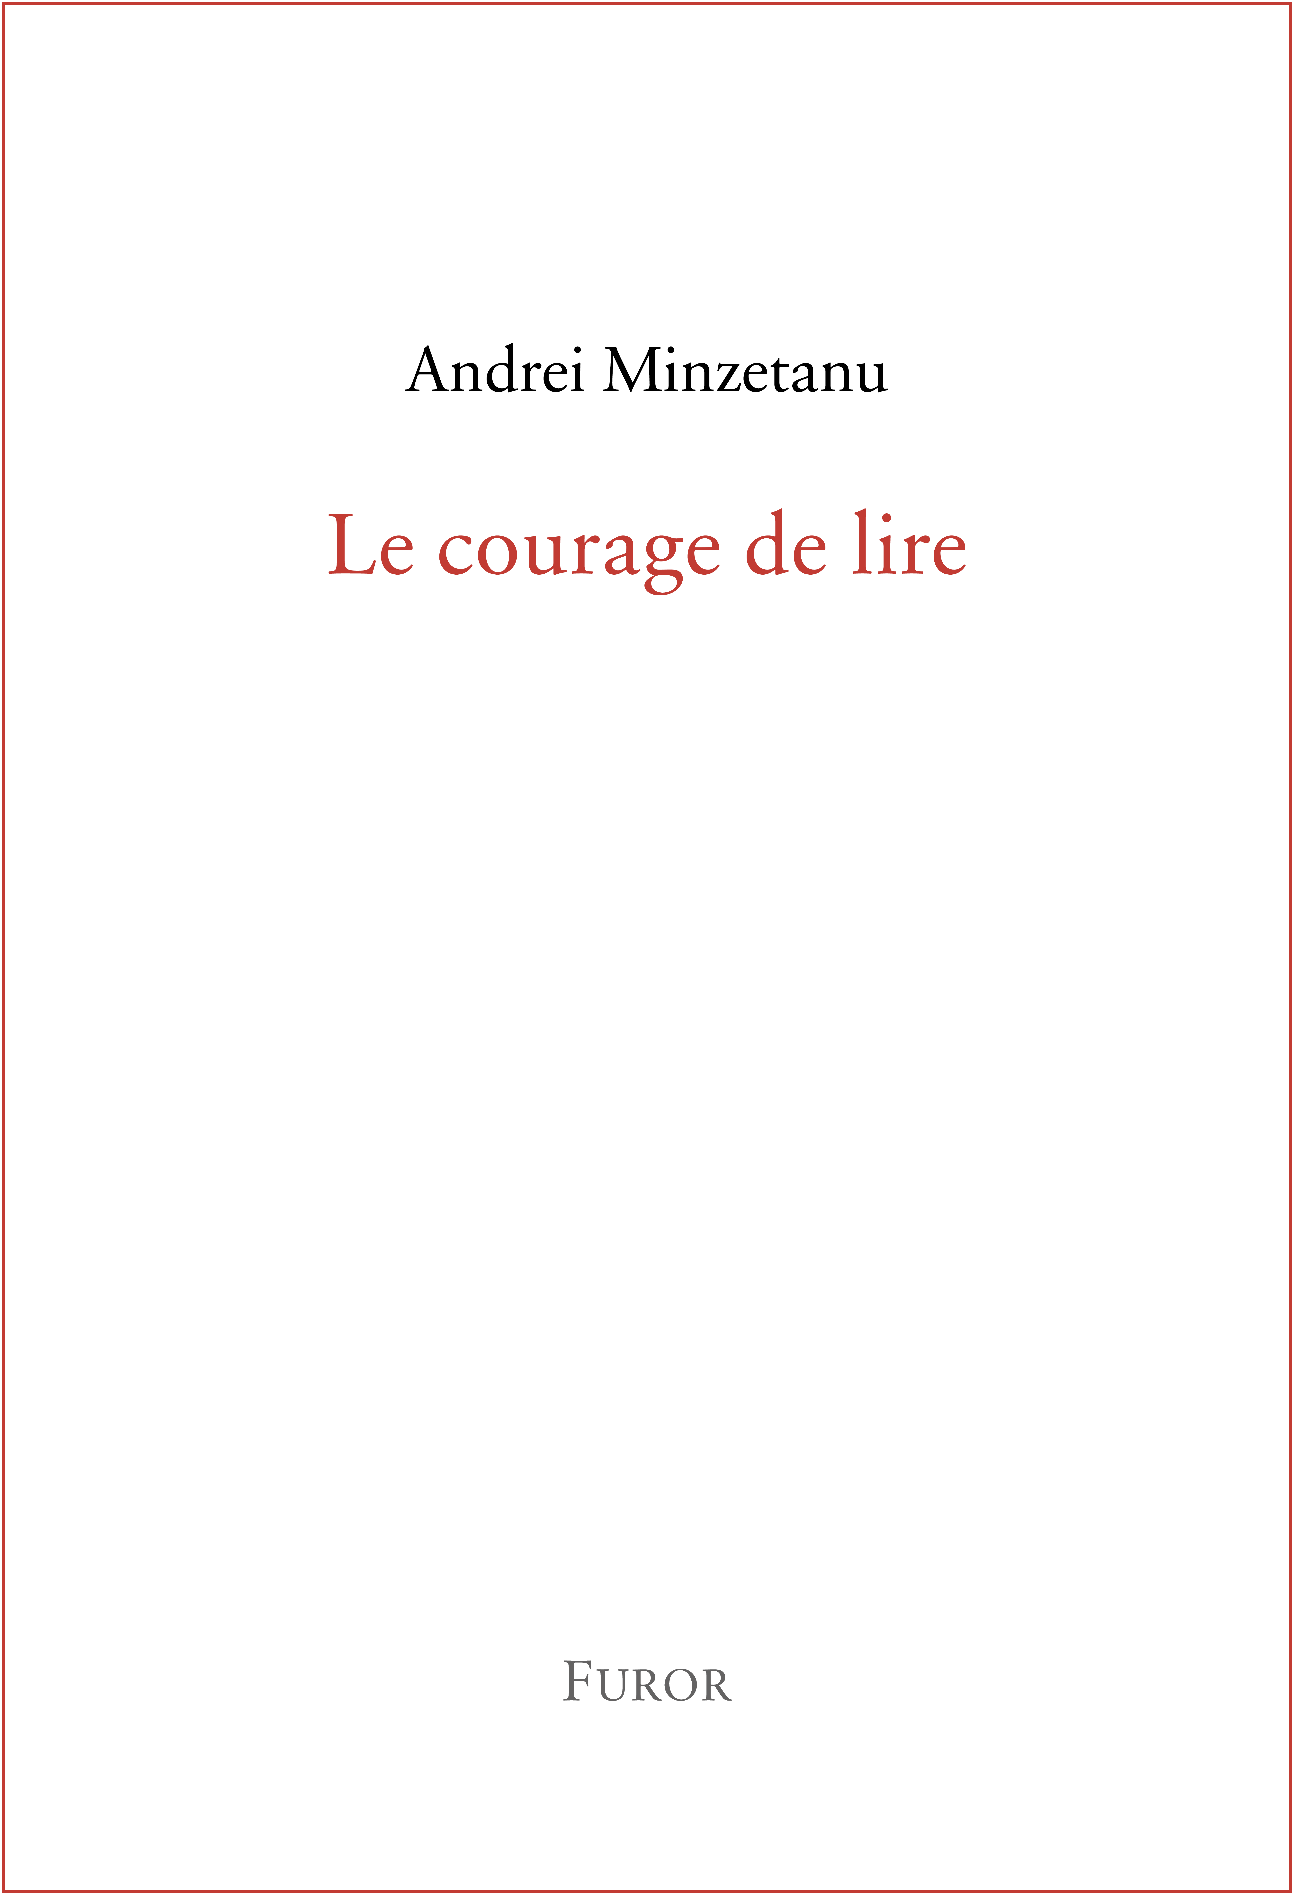 A. Minzetanu, Le courage de lire